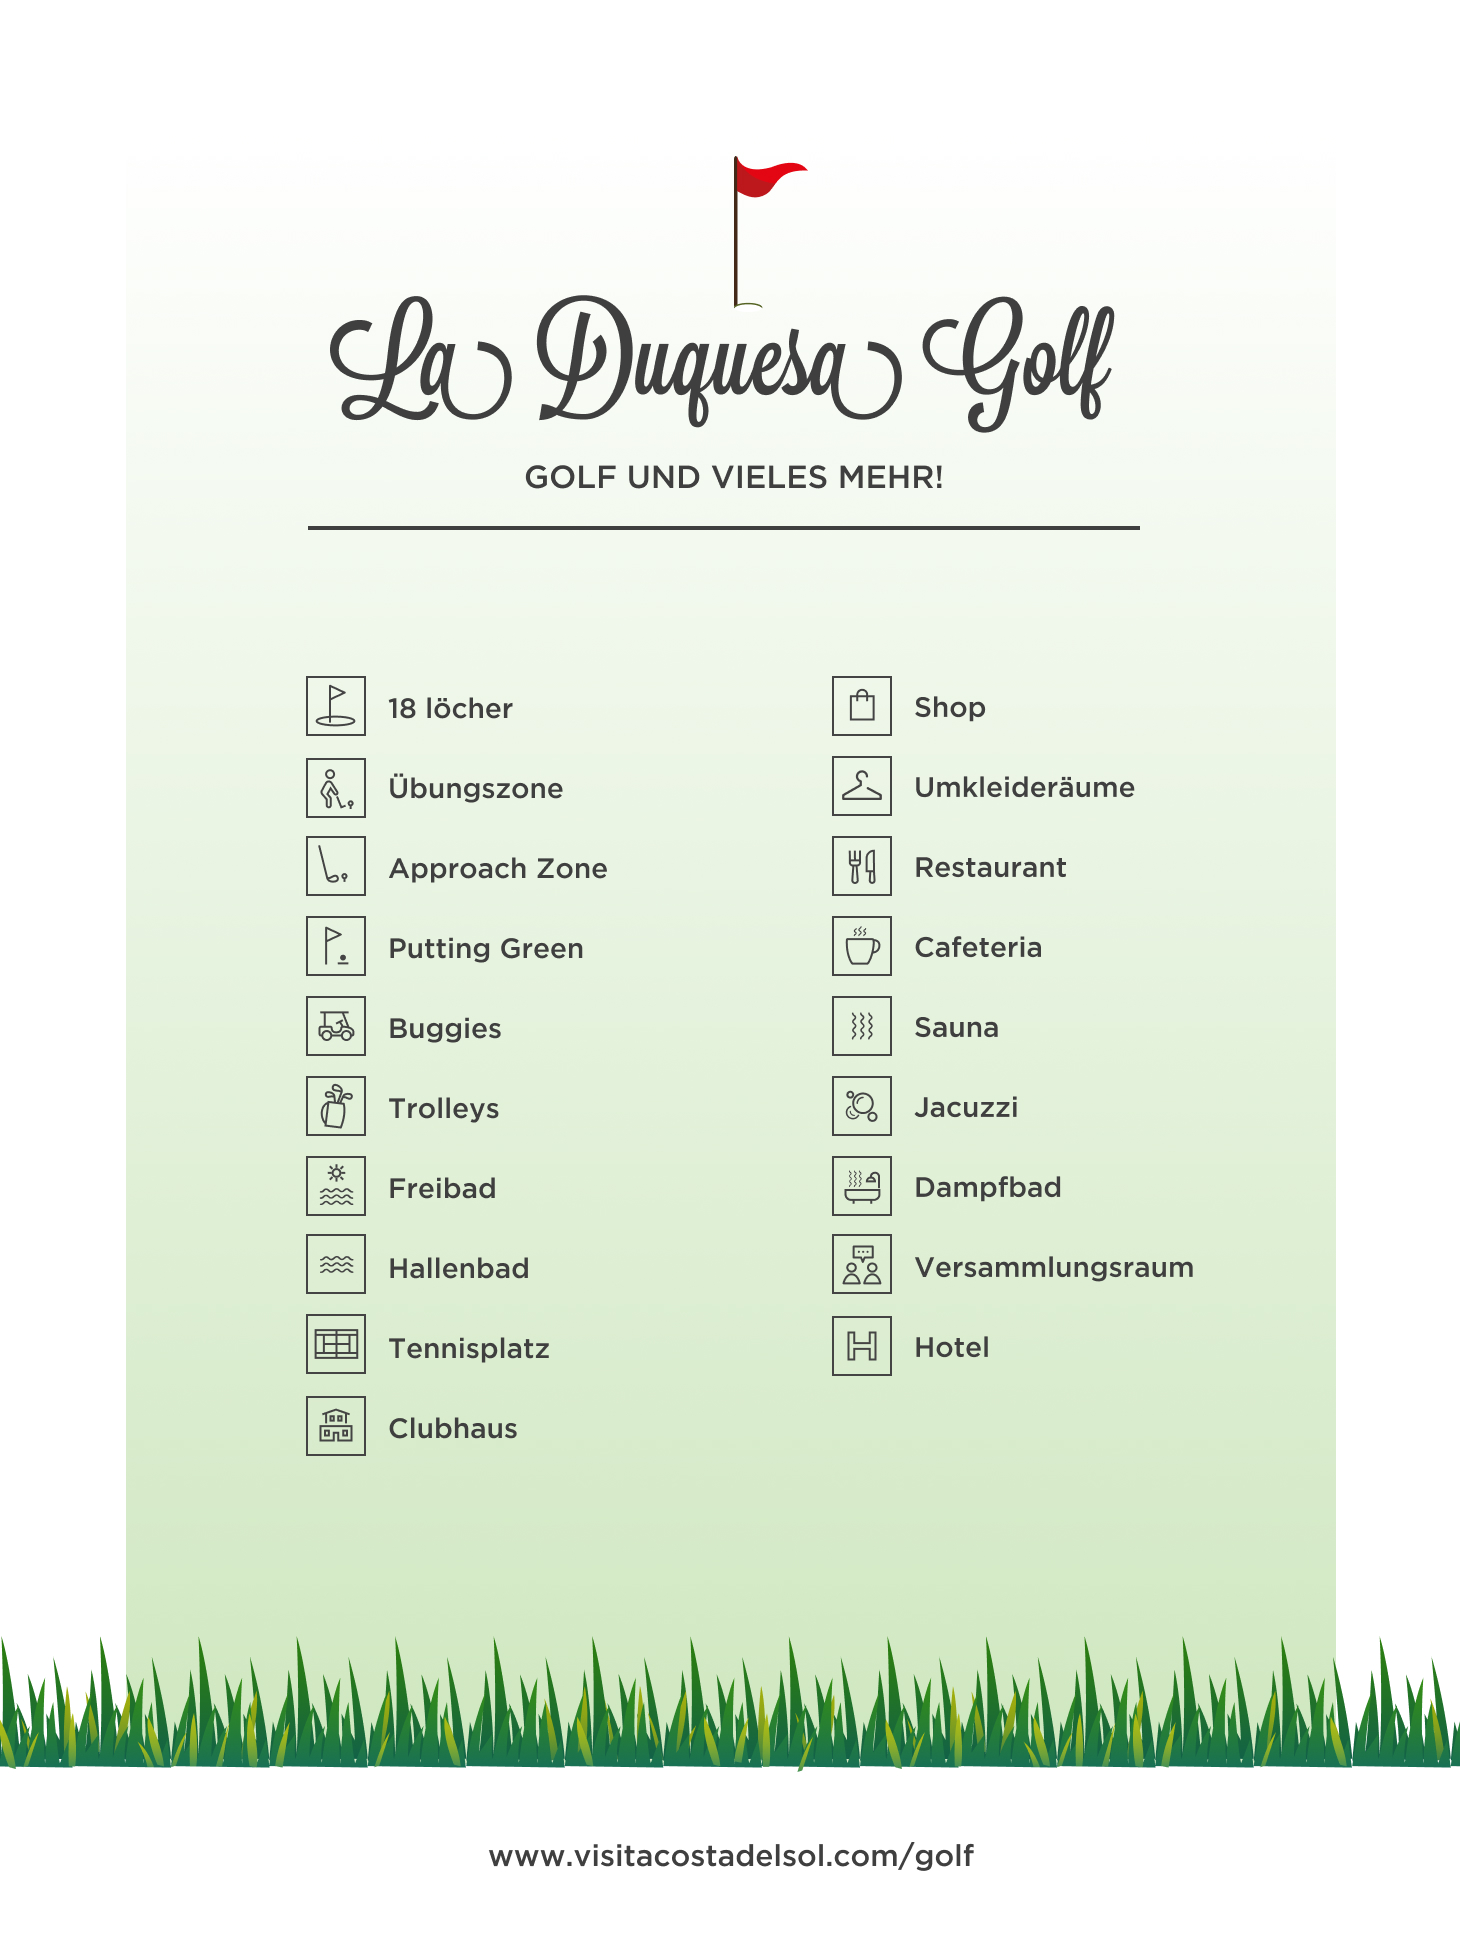 La Duquesa Golf Club